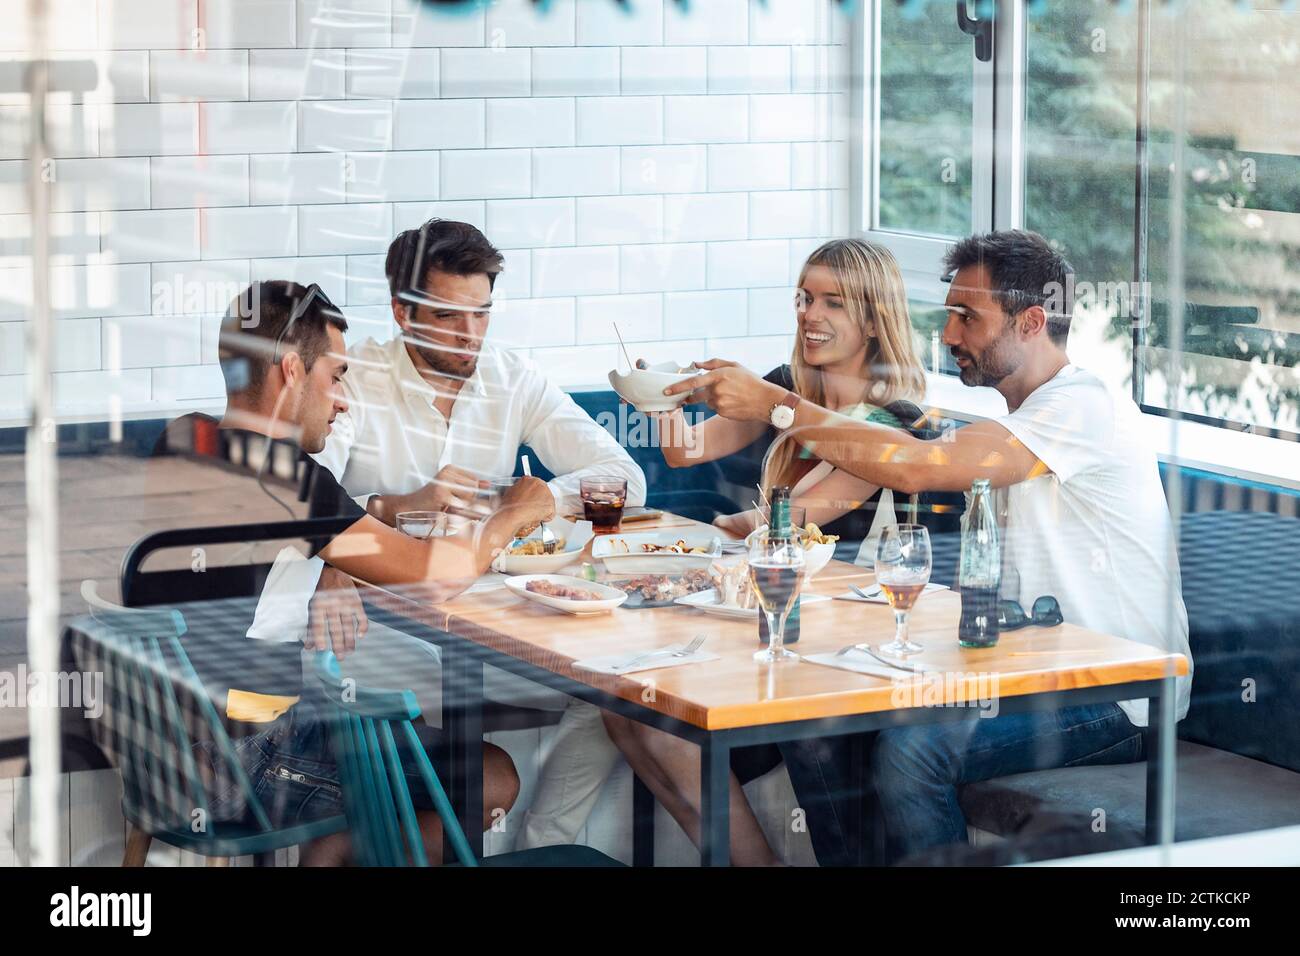 Friends enjoying meal at restaurant seen through window Stock Photo